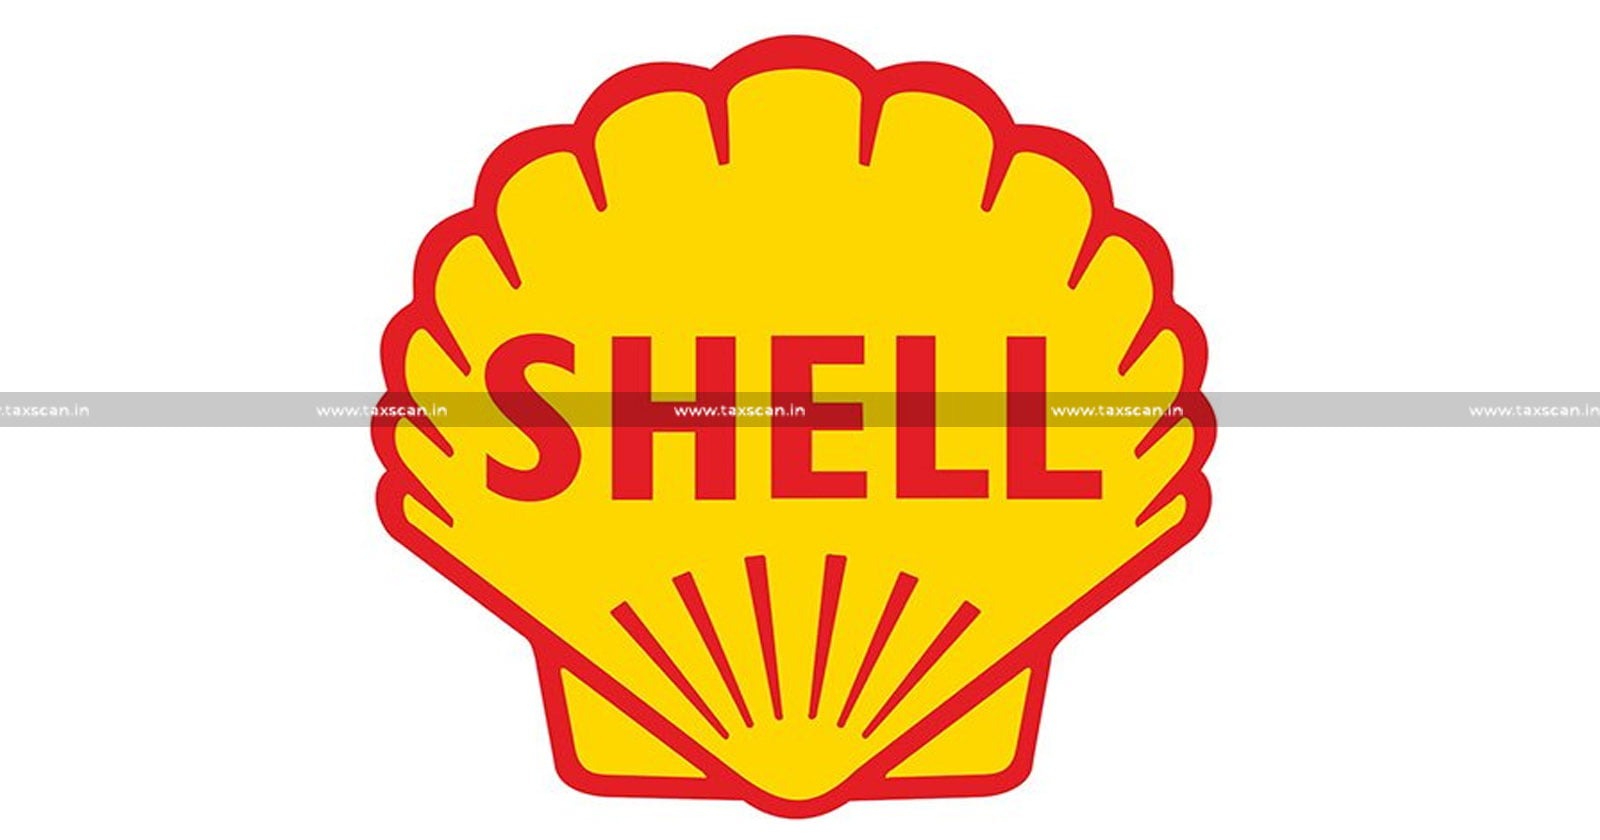 B.Com - Vacancy in Shell - taxscan - Vacancy - Shell - post of Senior Analyst - Senior Analyst - jobscan